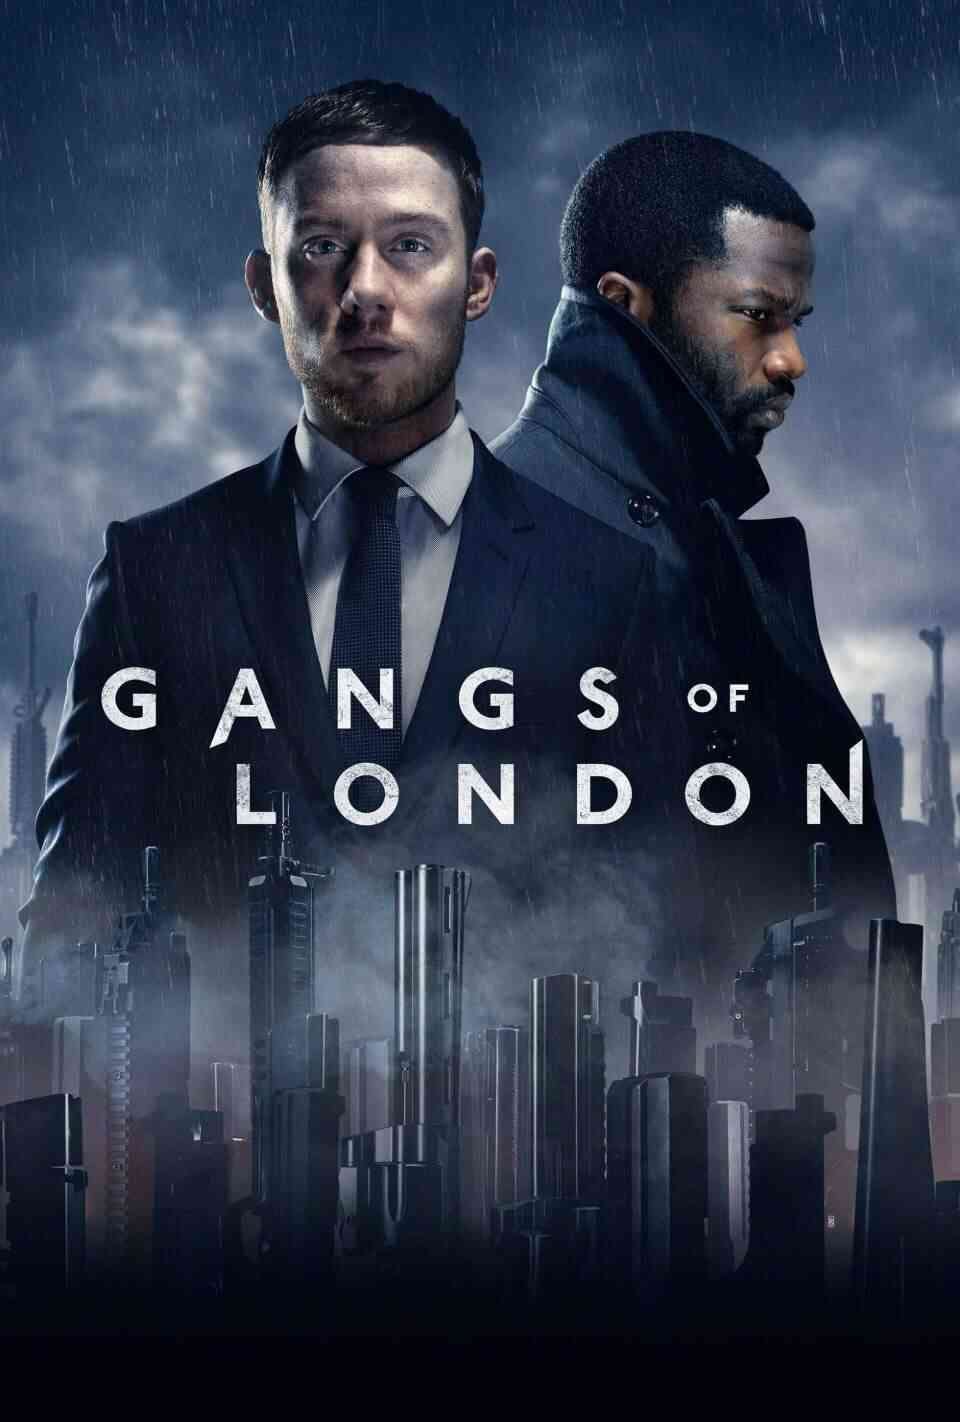 Read Gangs of London screenplay (poster)